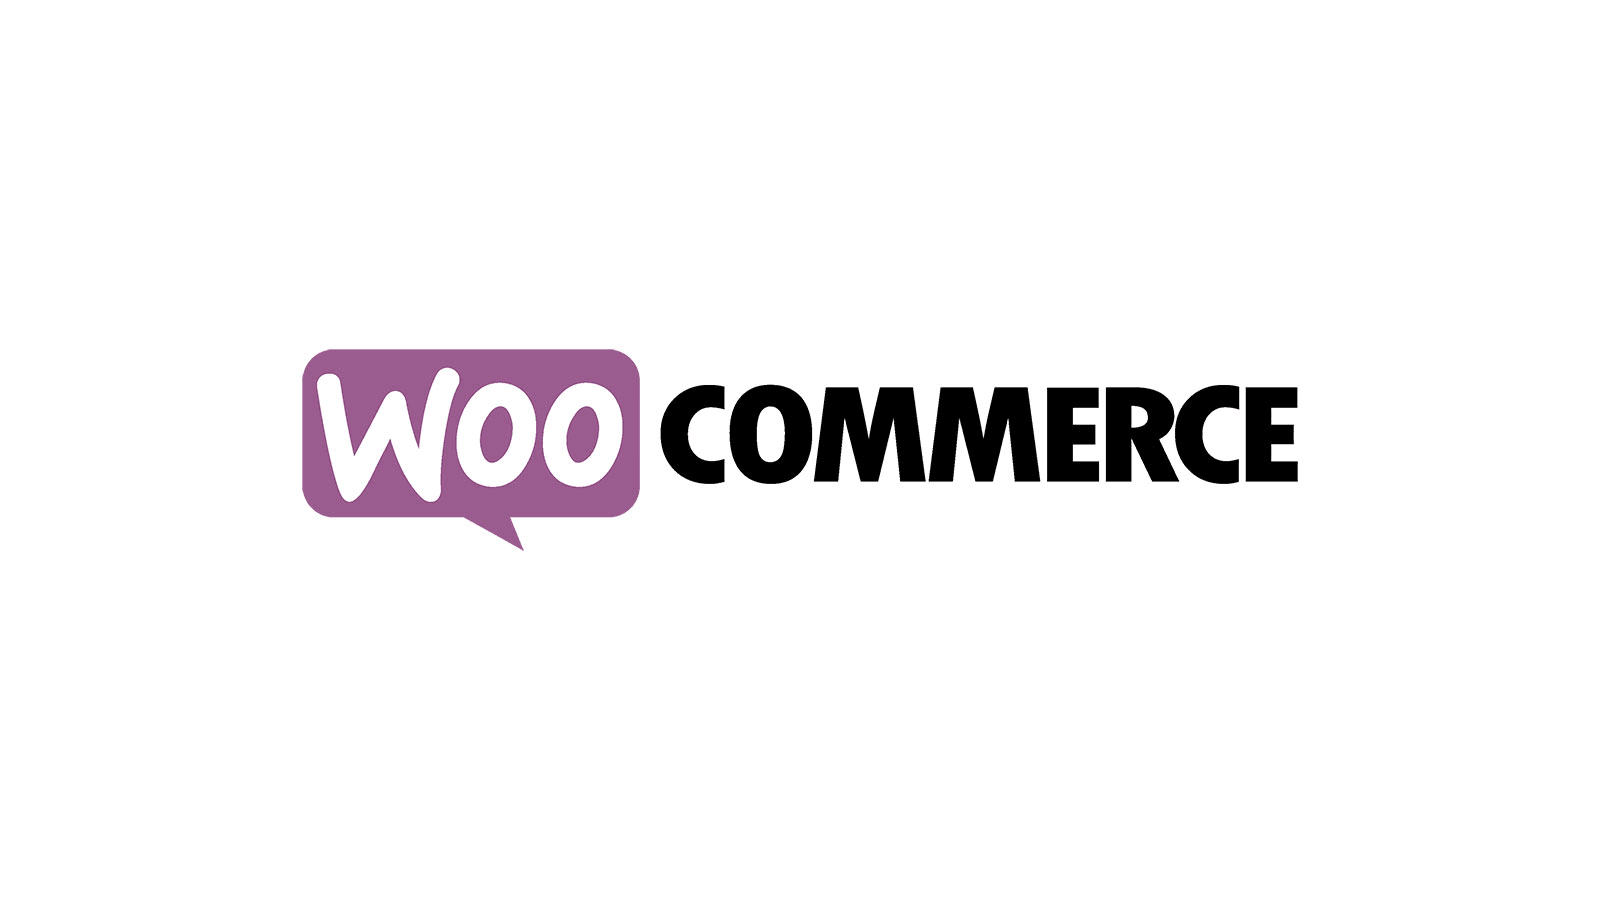 Prosperna Marketing Site | Shopify vs WooCommerce: Battle of the Website Builders